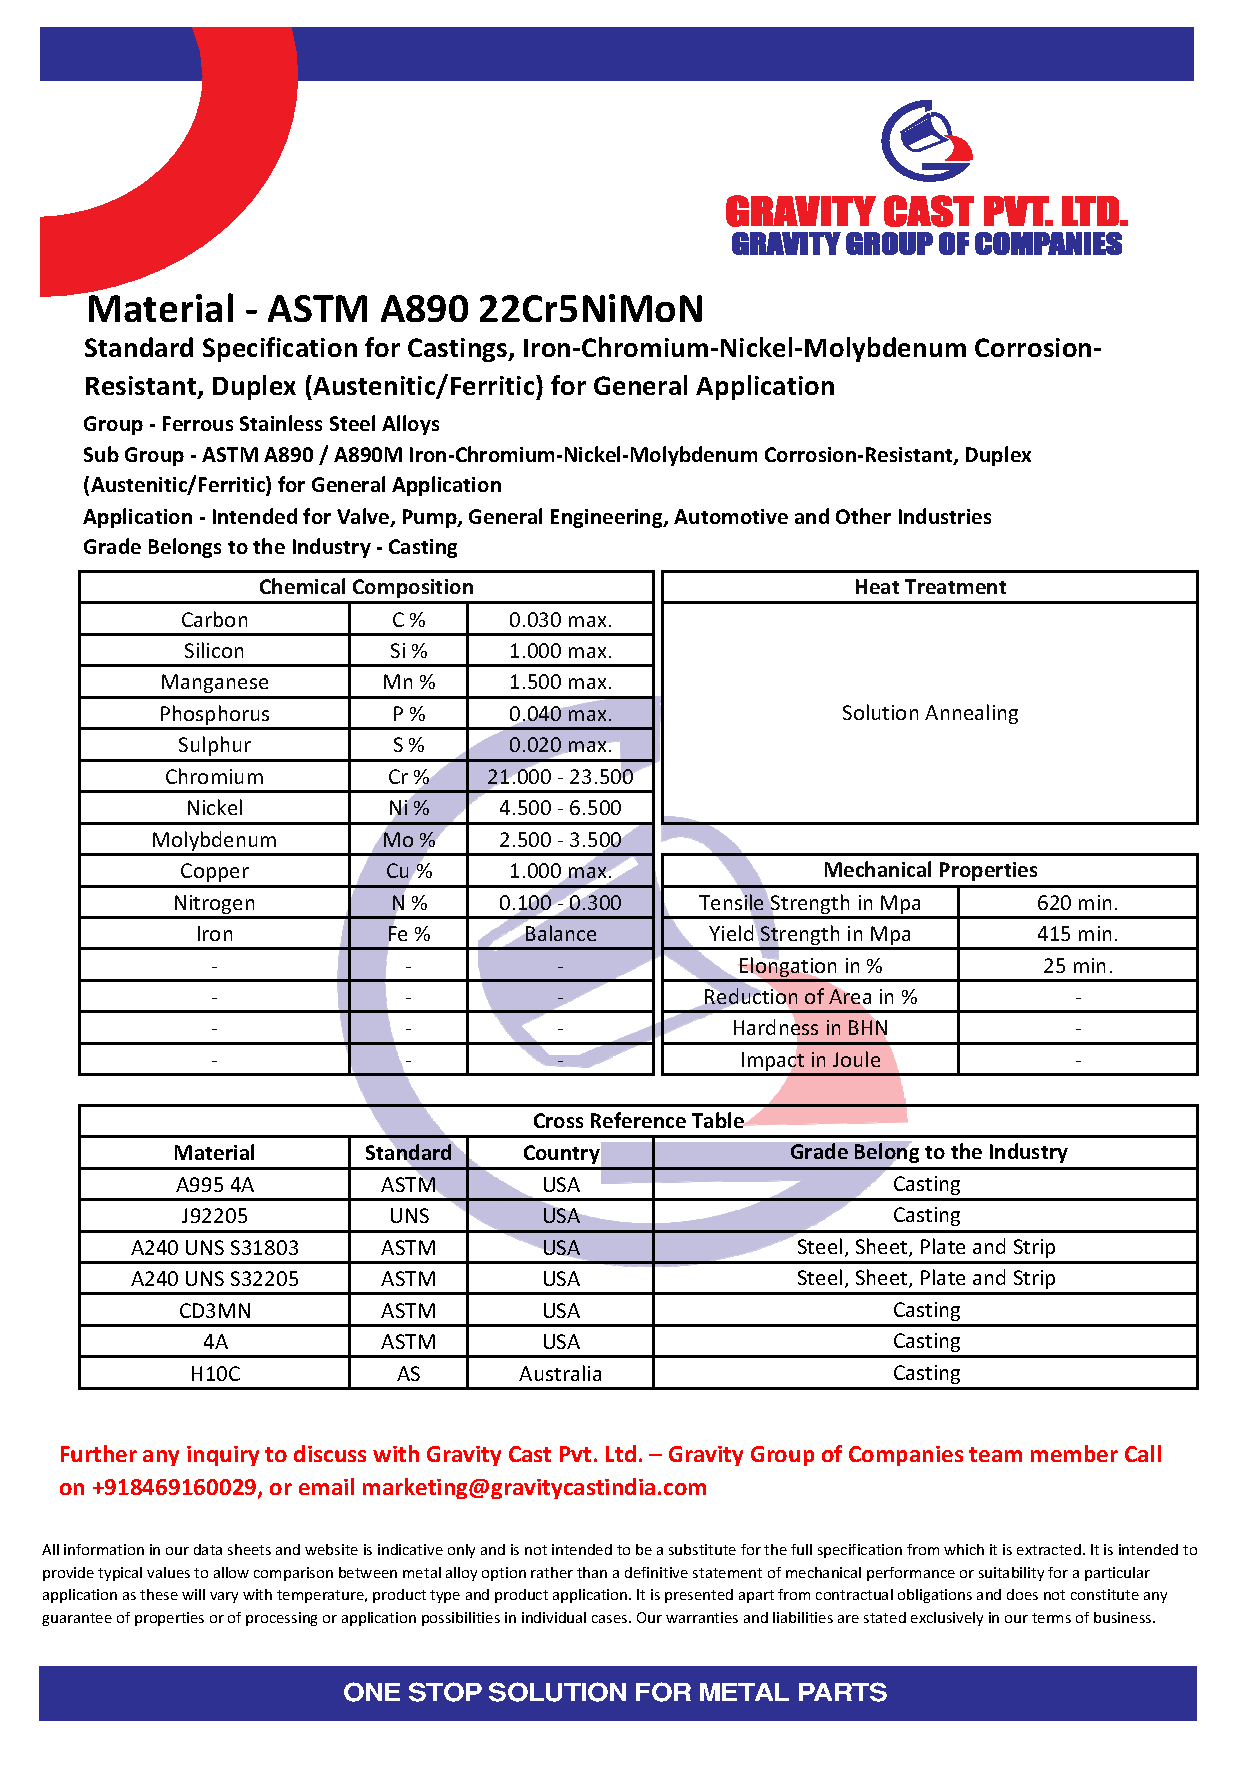 ASTM A890 22Cr5NiMoN.pdf